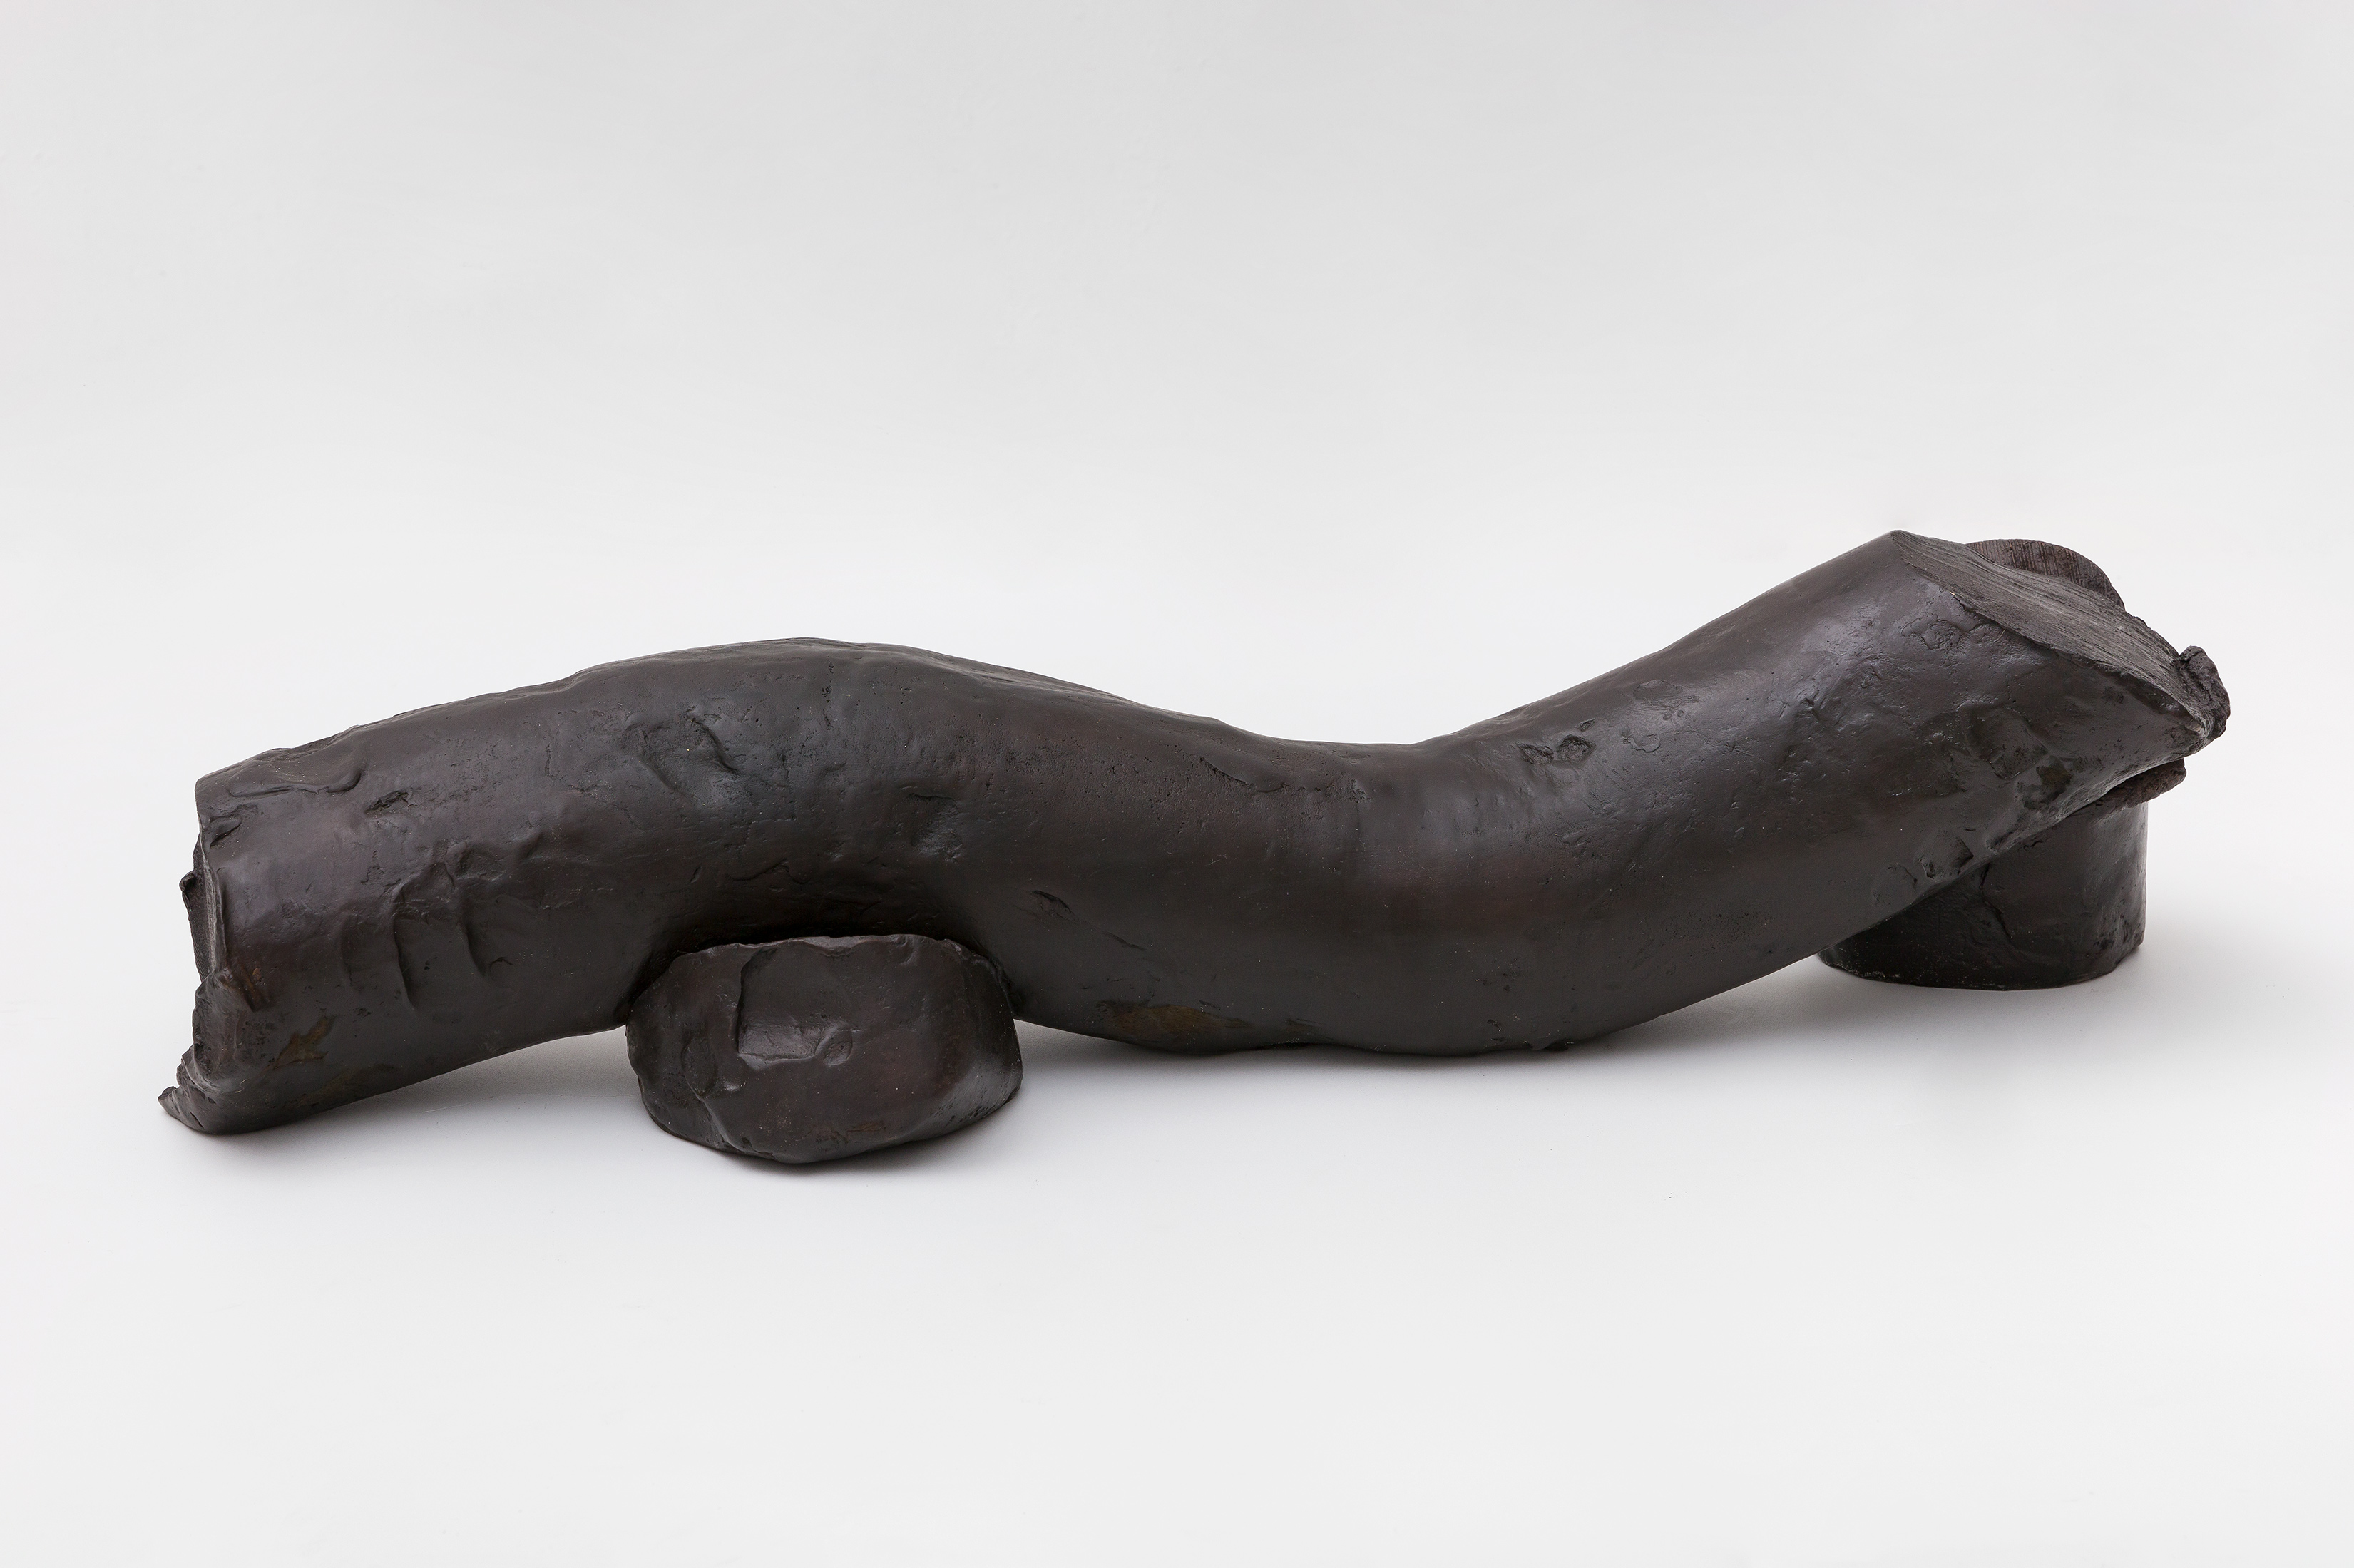 Paulo Monteiro's Untitled patinated bronze sculpture